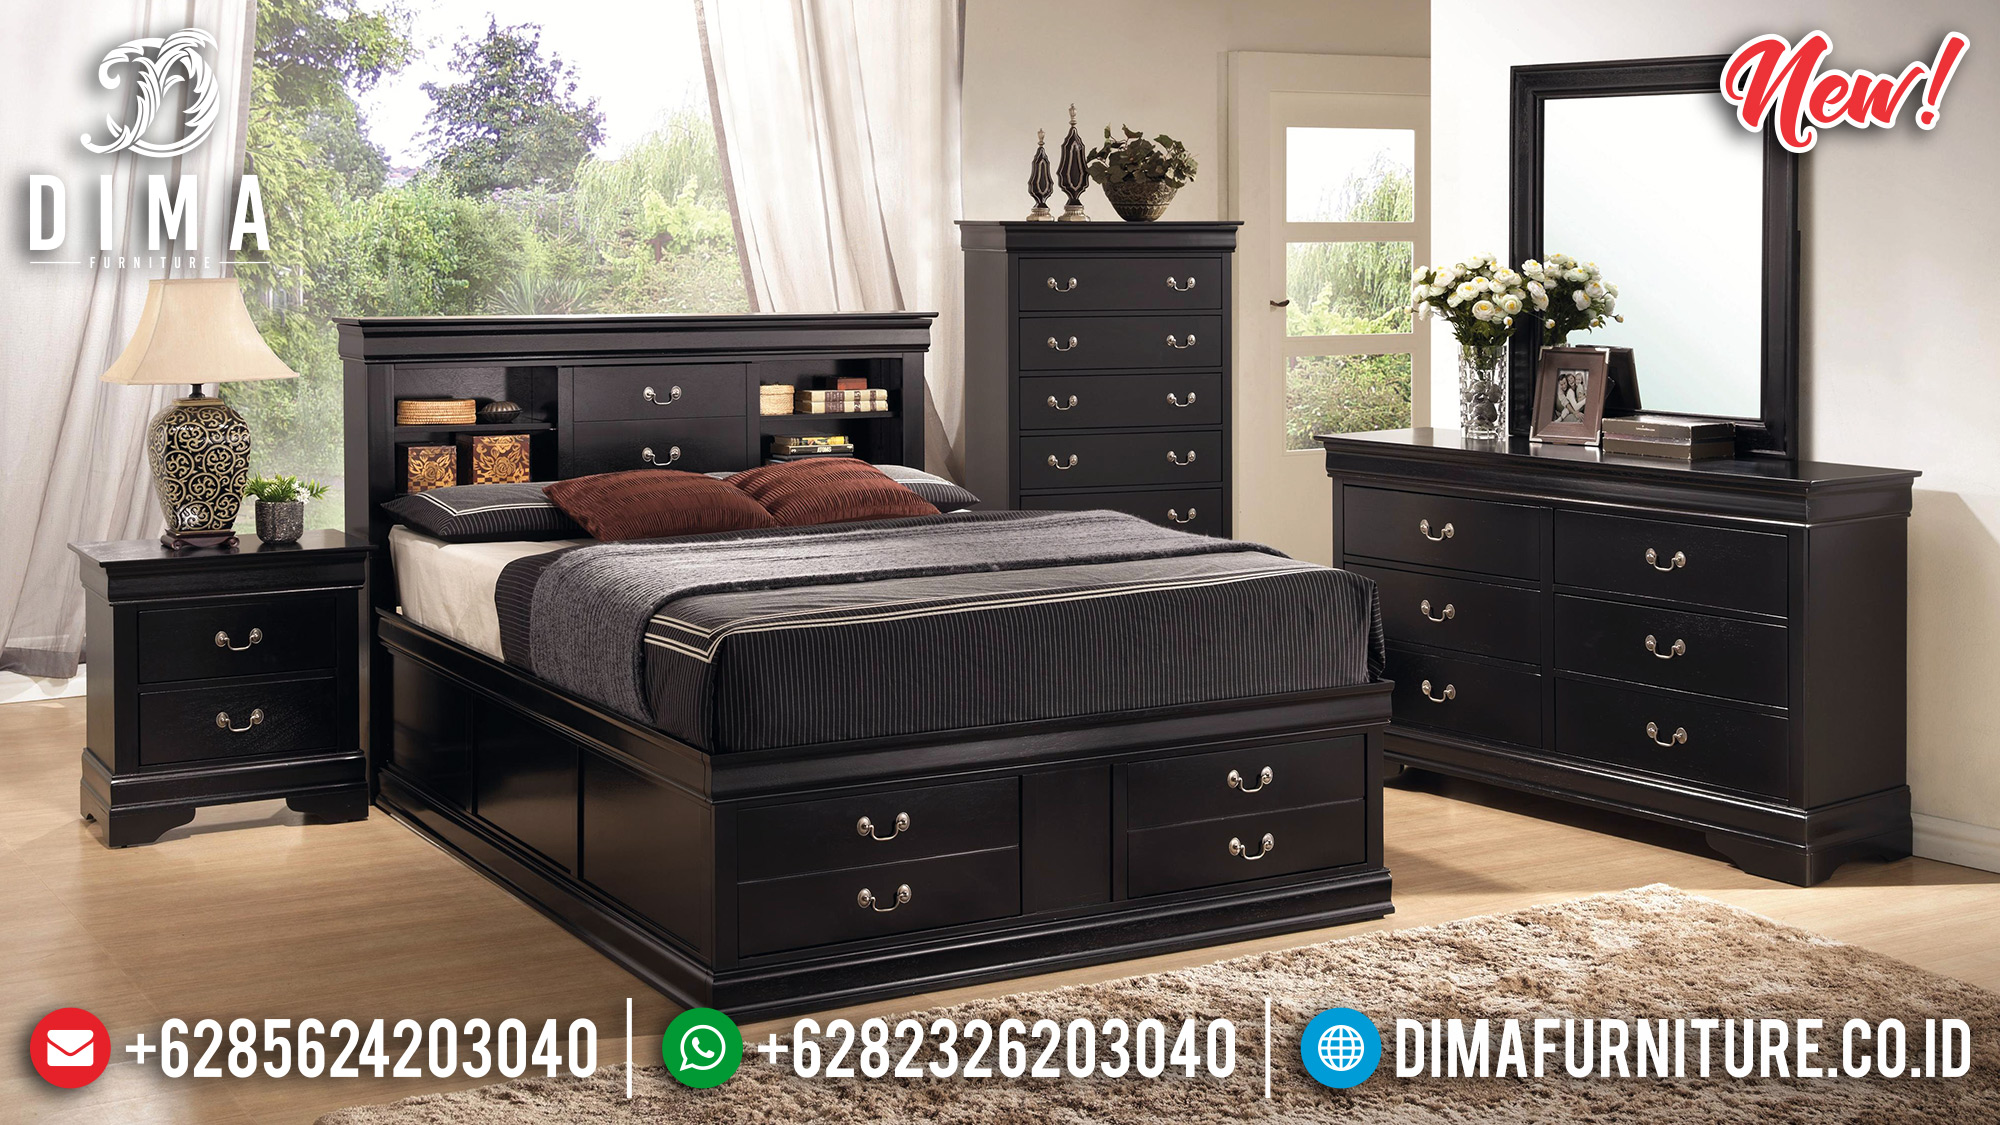 Wonderlful Furniture Set Tempat Tidur Jepara Minimalis MMJ-0213